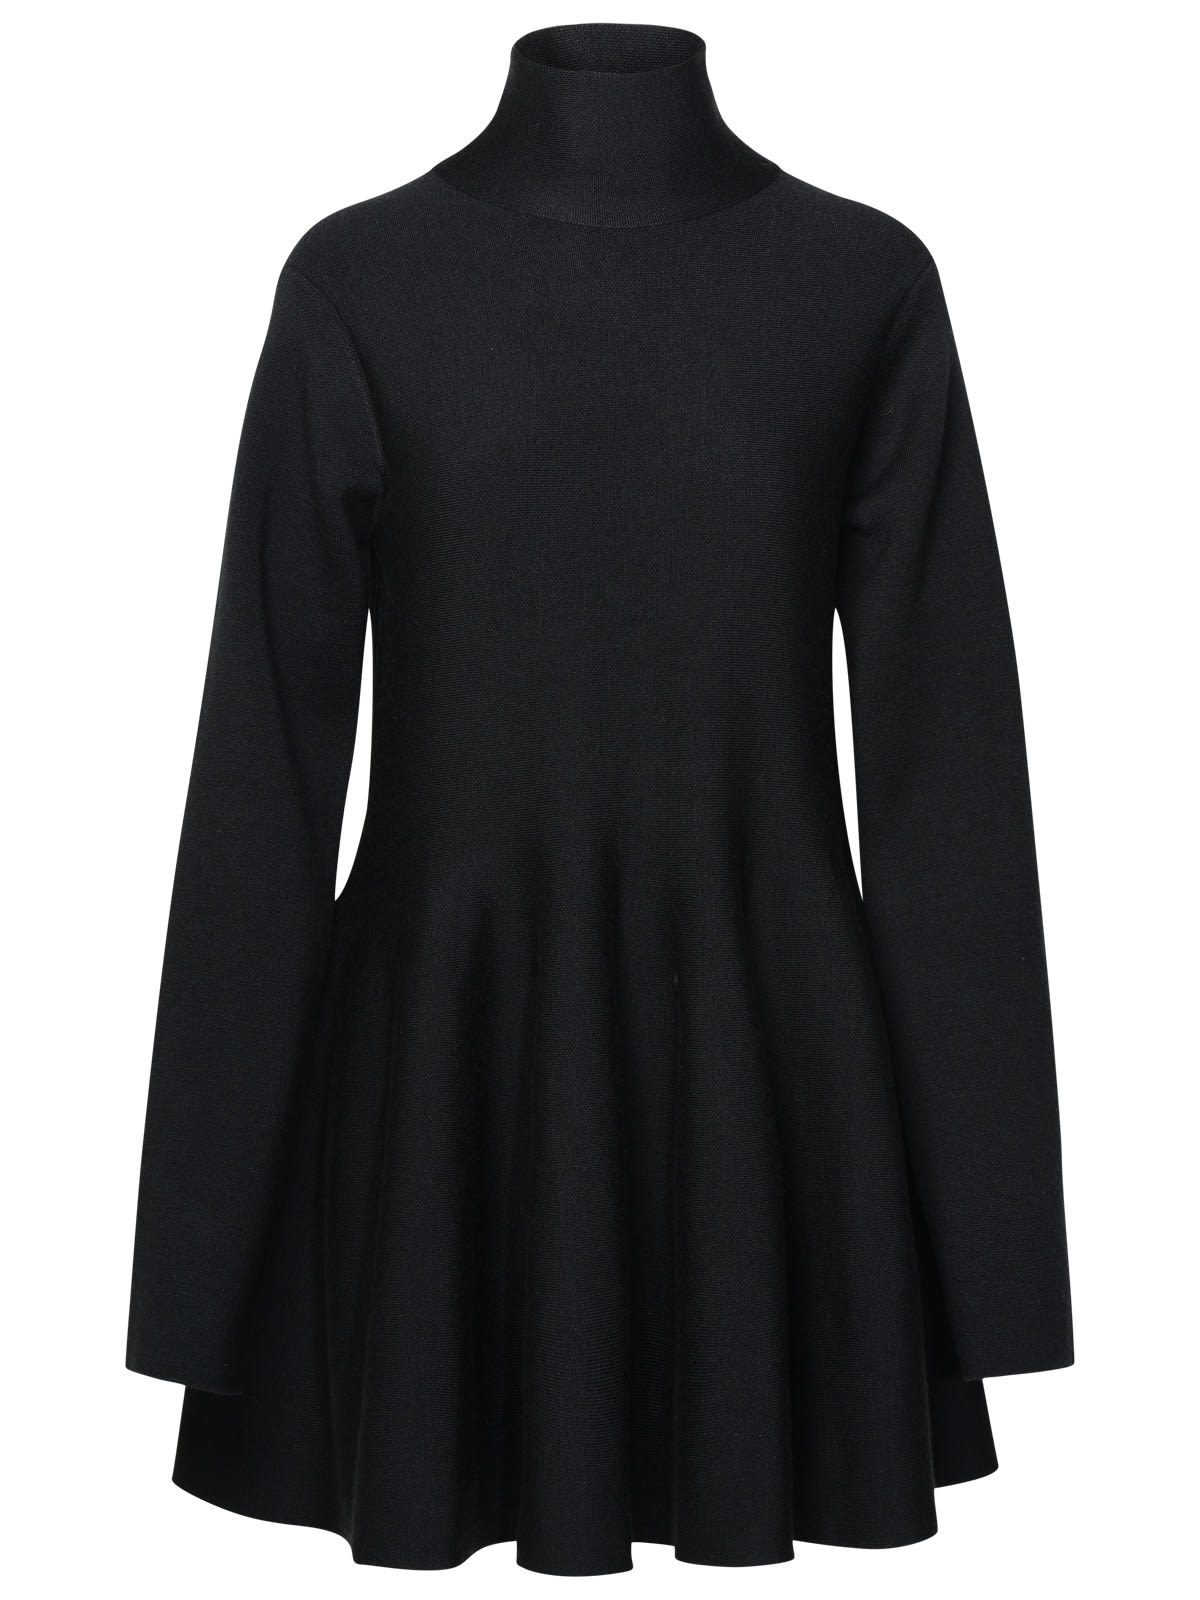 Black Wool Blend Dress